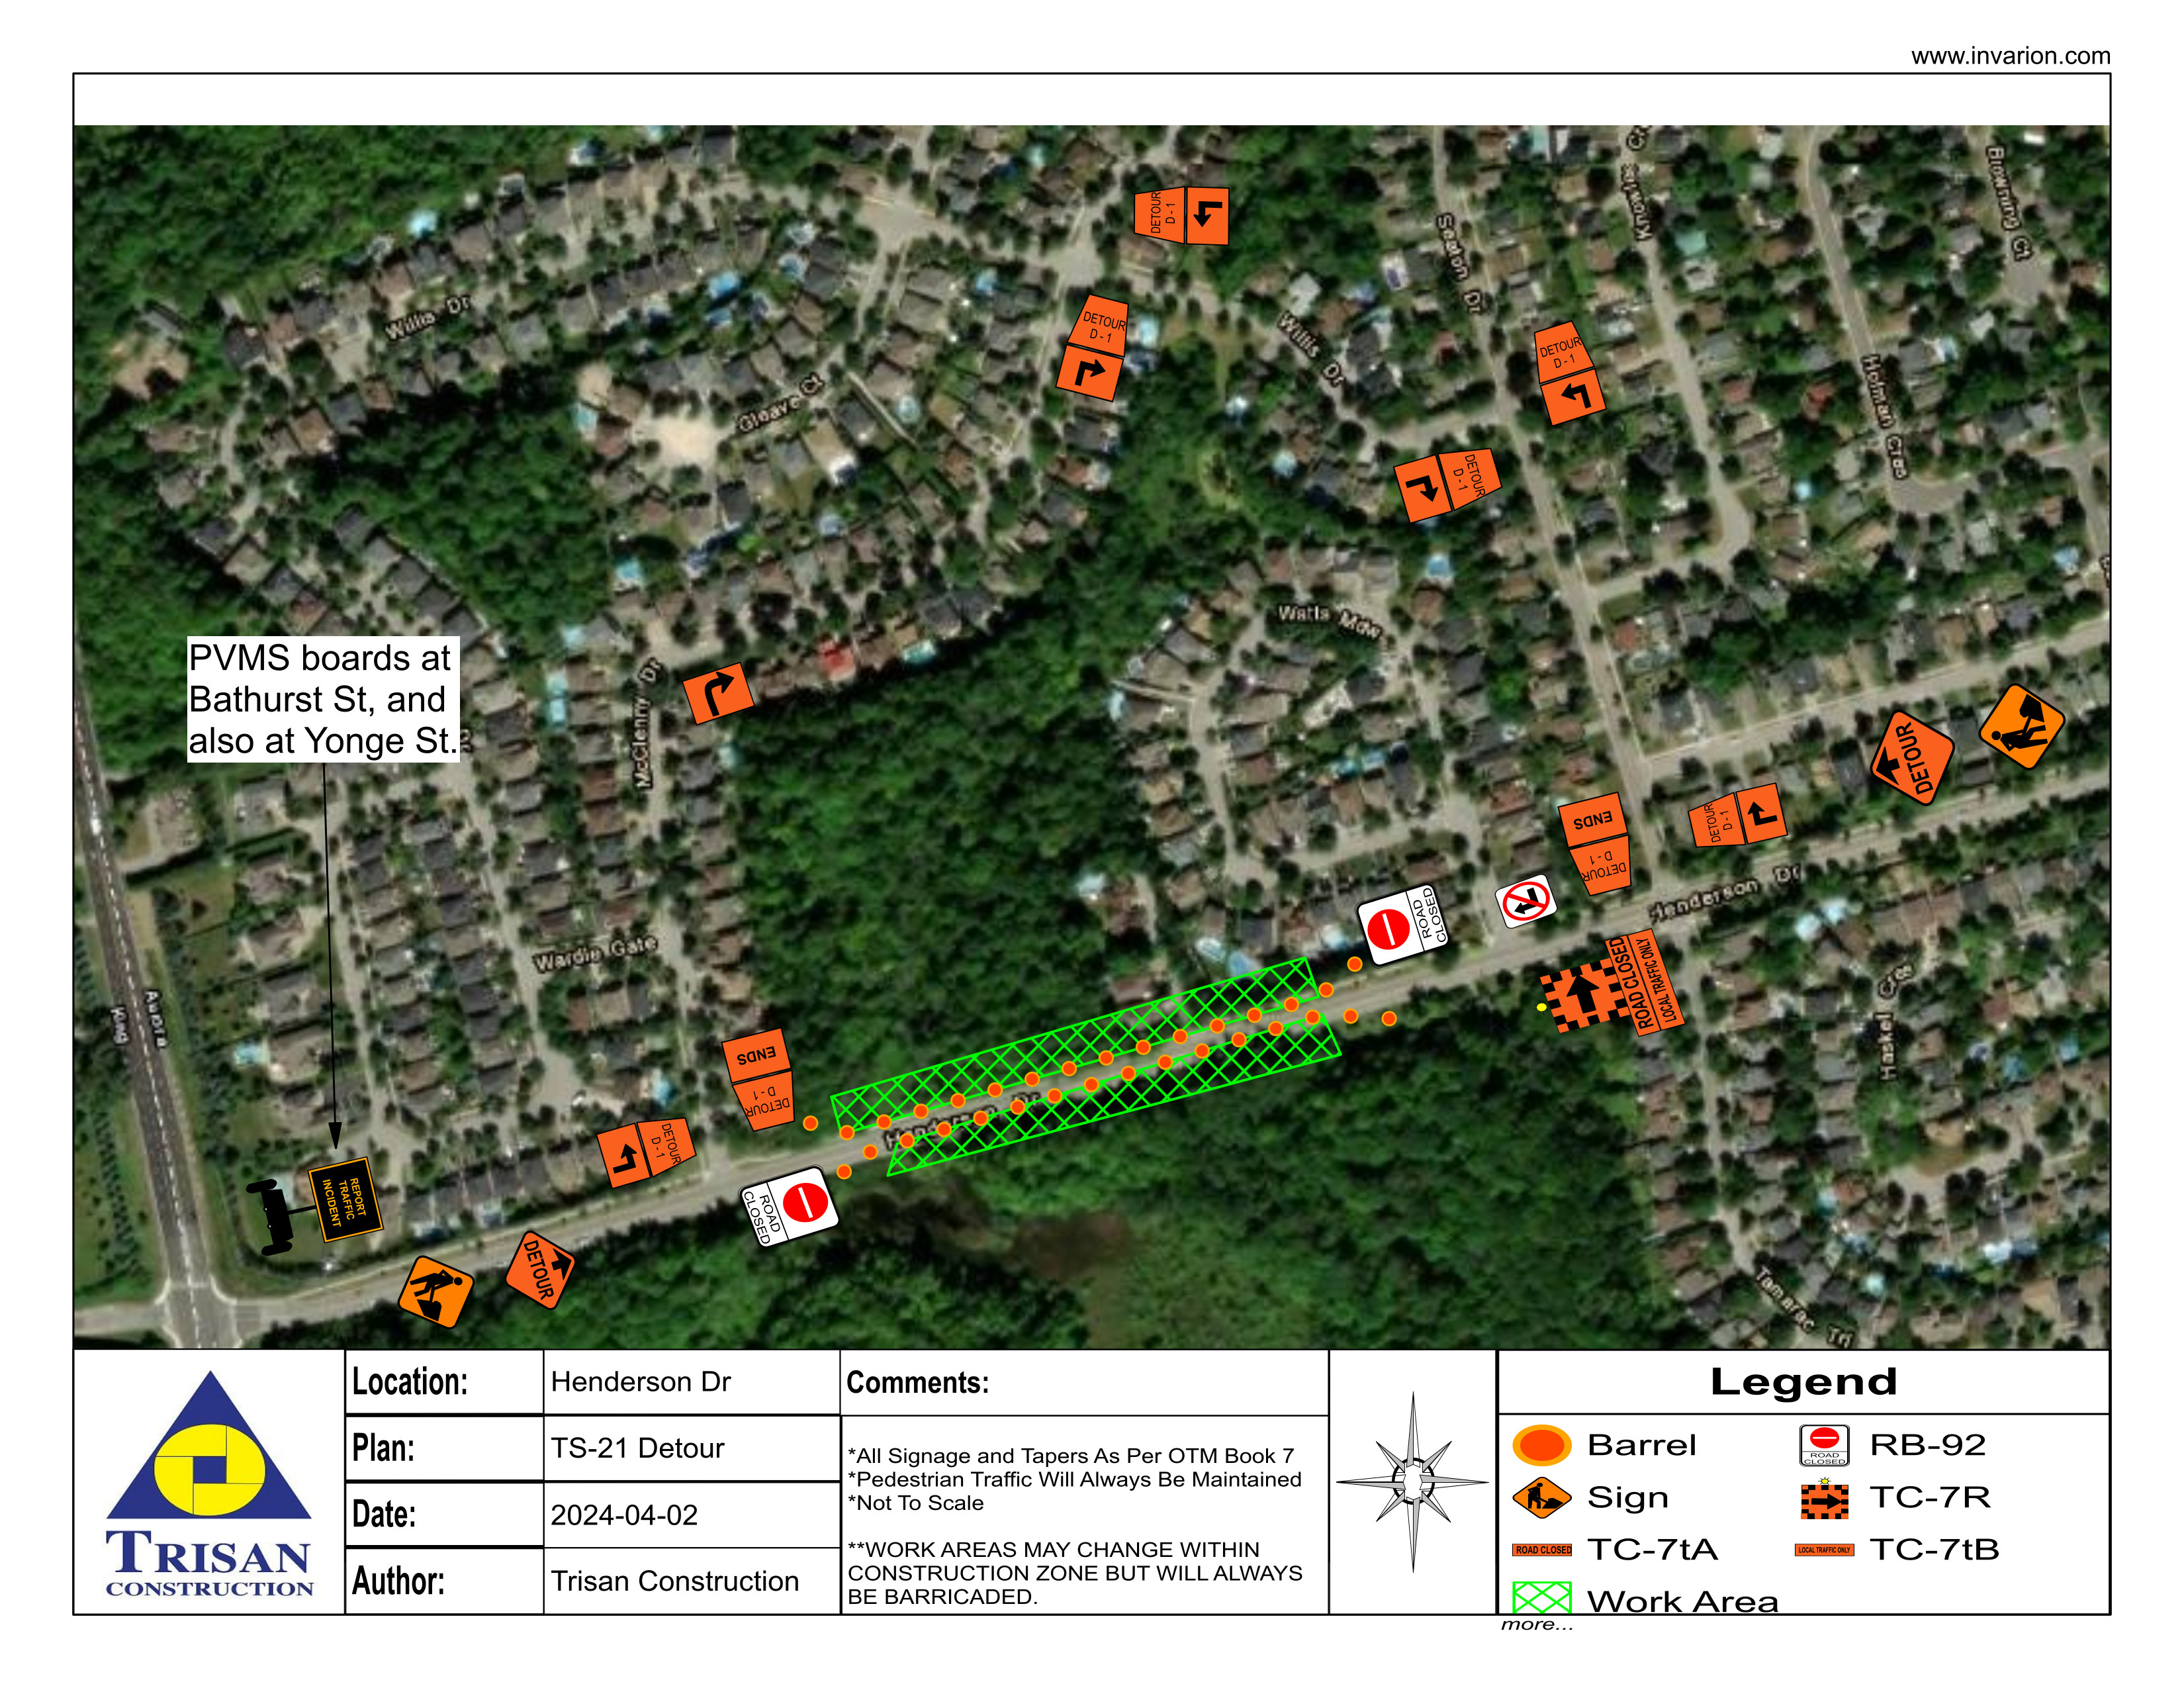 Image of detour routes for Henderson Drive road closure